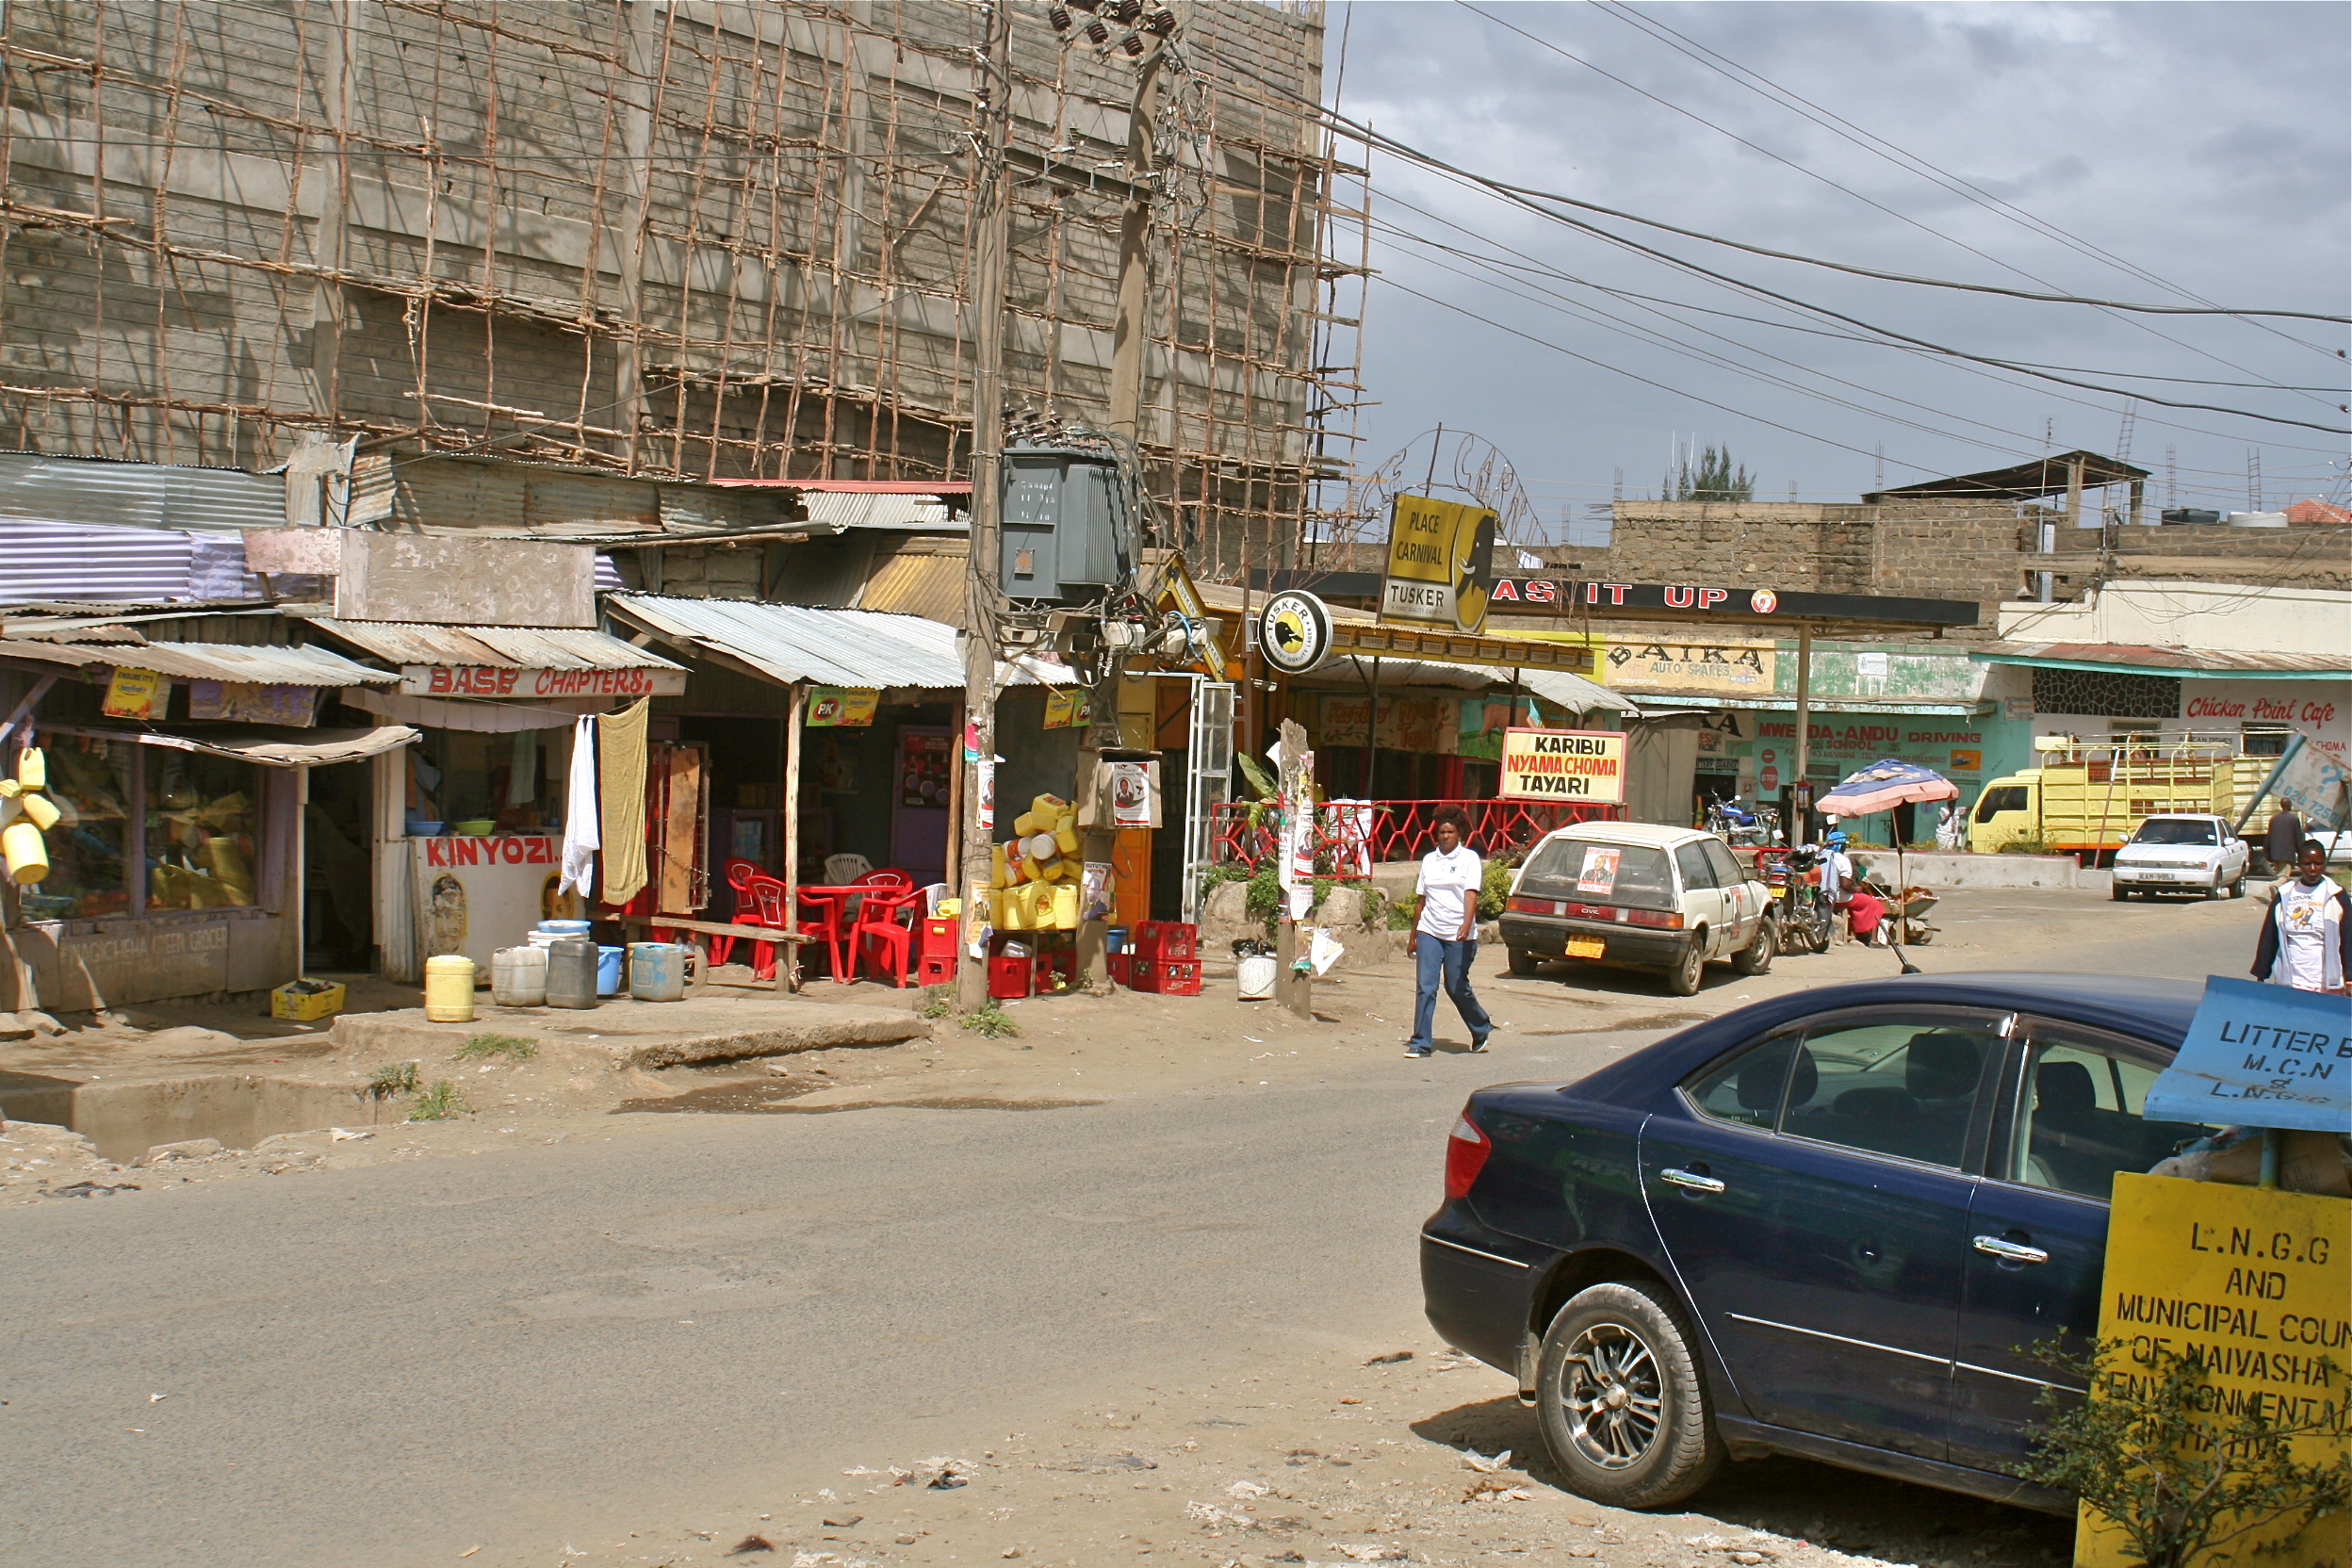  Escort in Kitale, Kenya